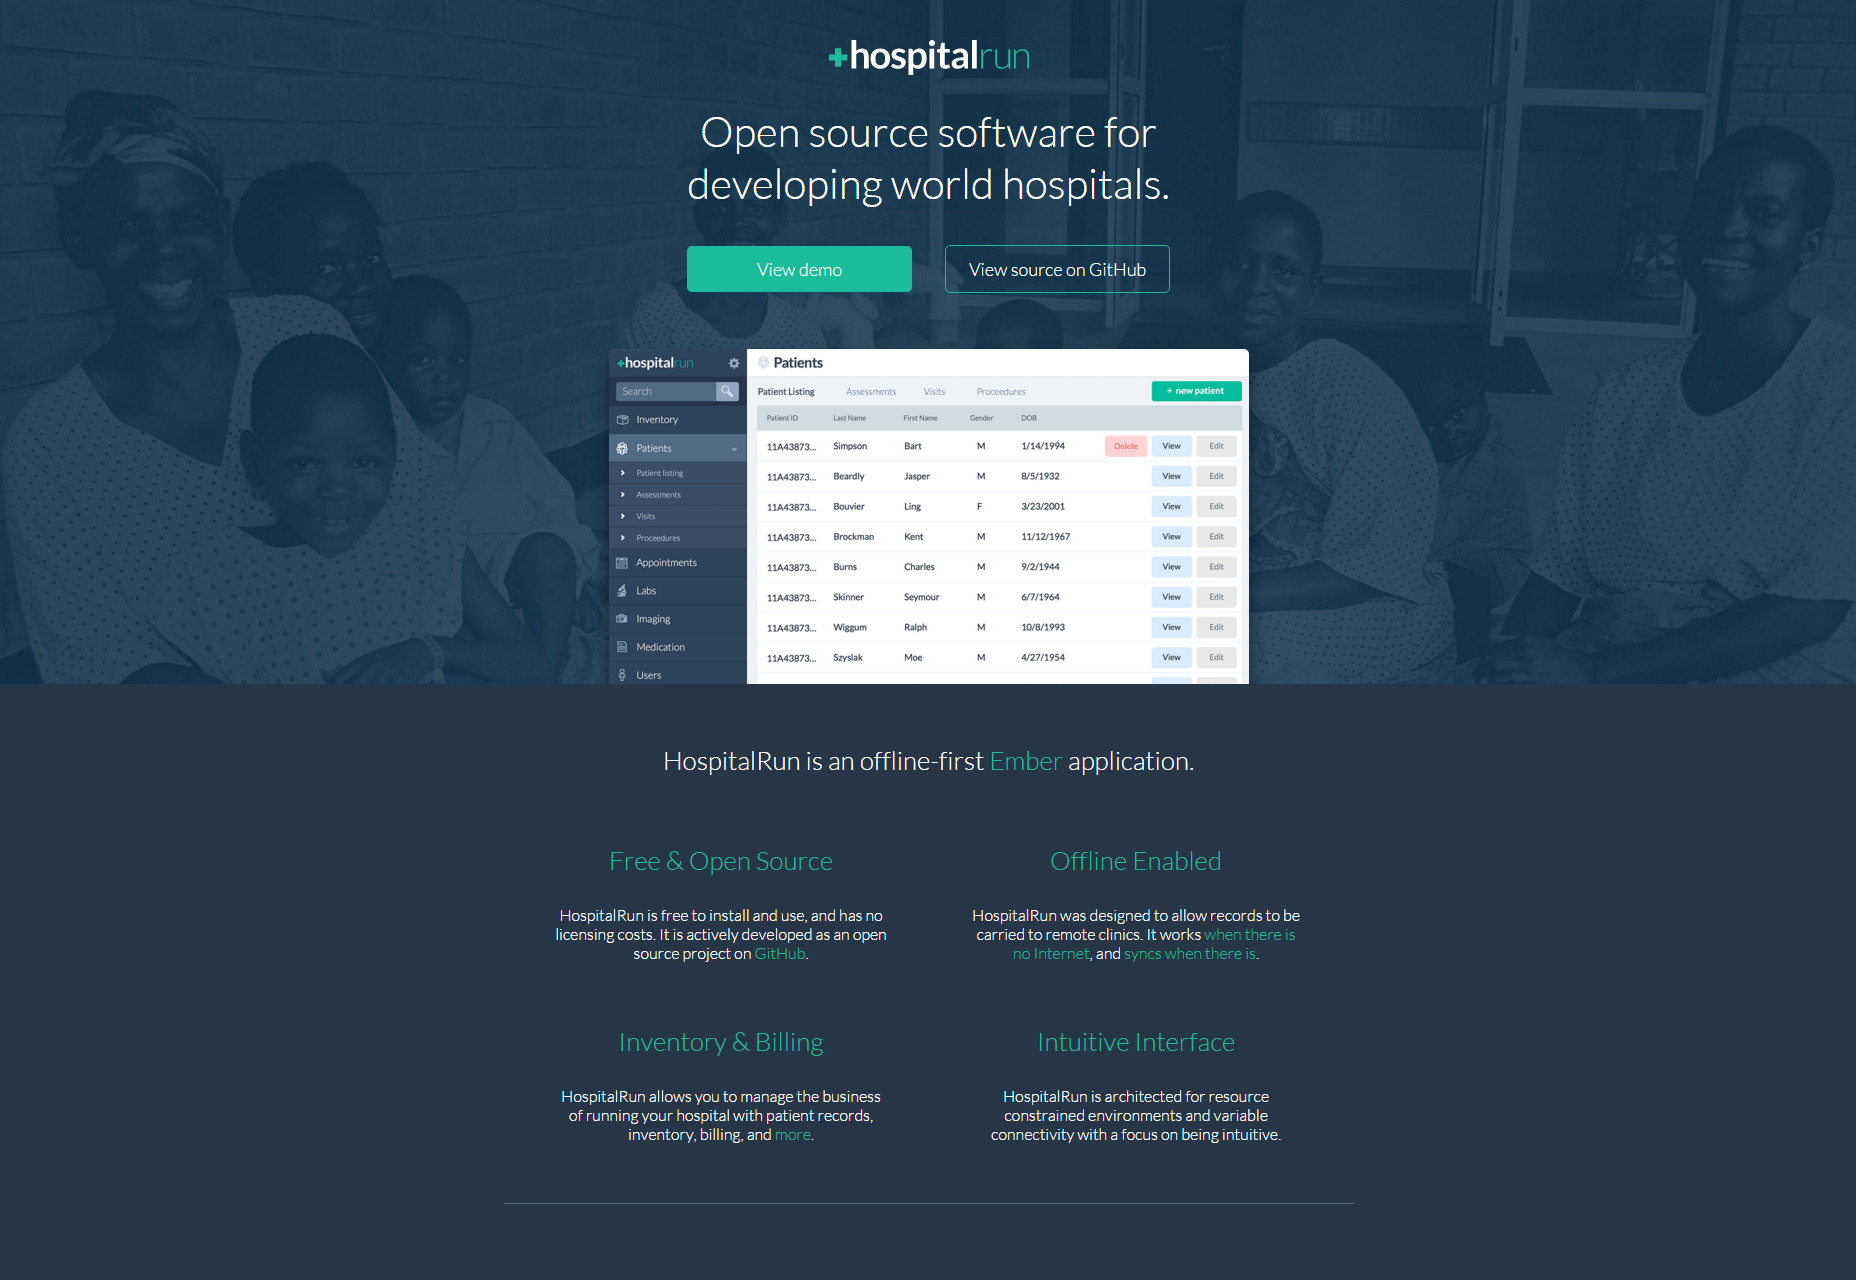 HospitalRun: Open Source Software for Developing World Hospitals